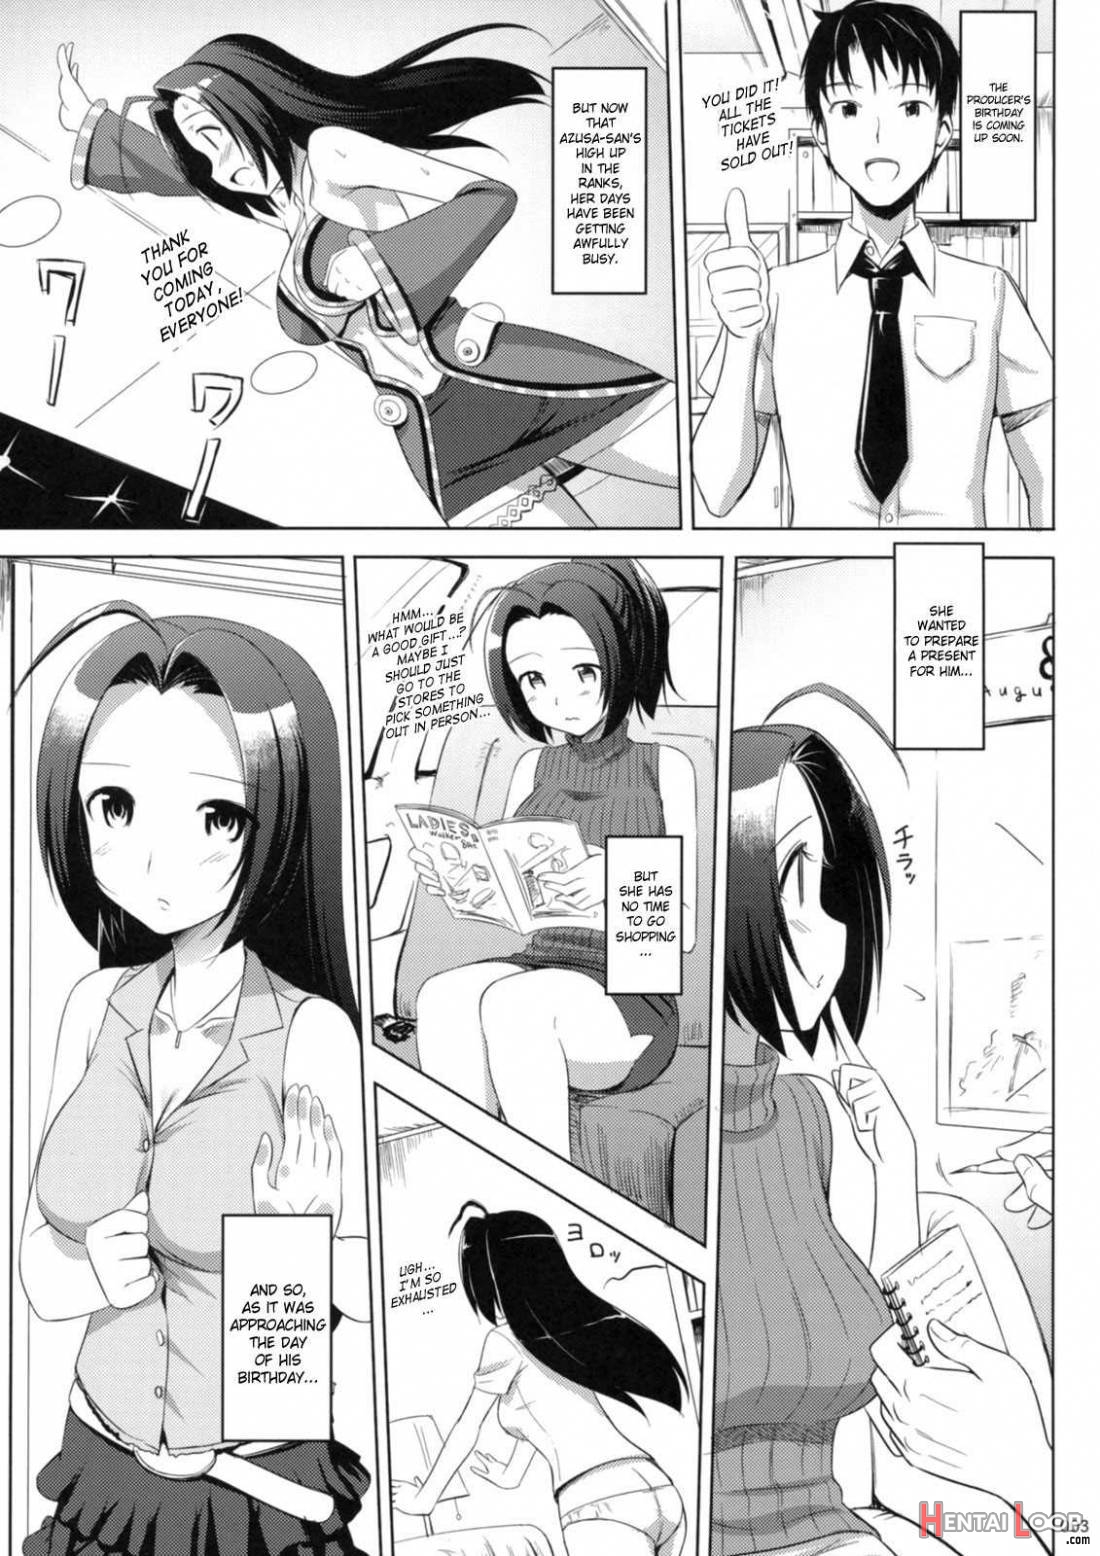 Azusa-san No Present For You! page 3